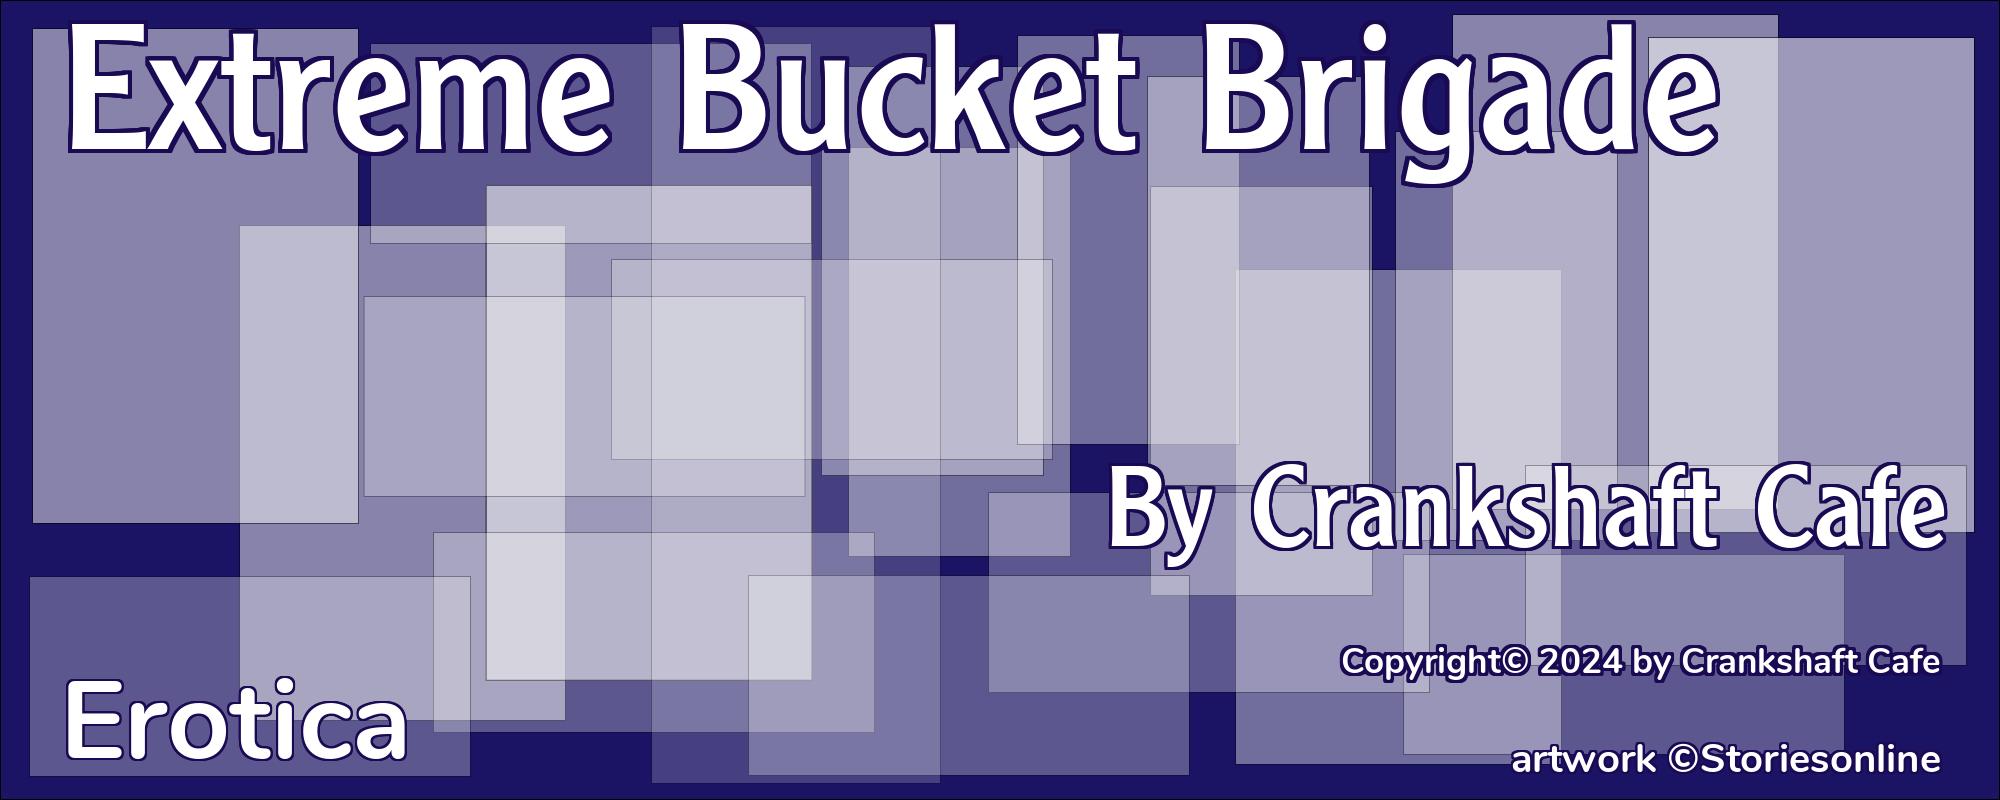 Extreme Bucket Brigade - Cover